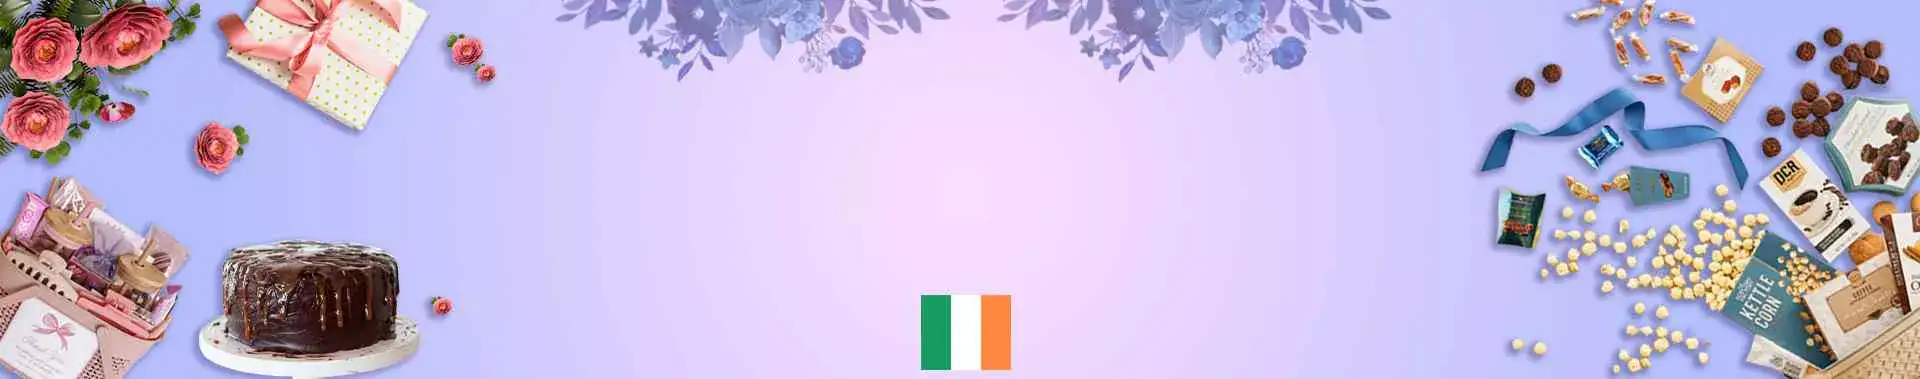 Send Gifts to Ireland, Gift Baskets to Ireland, Hampers to Ireland, Hampers & Gifts delivery in Ireland Online